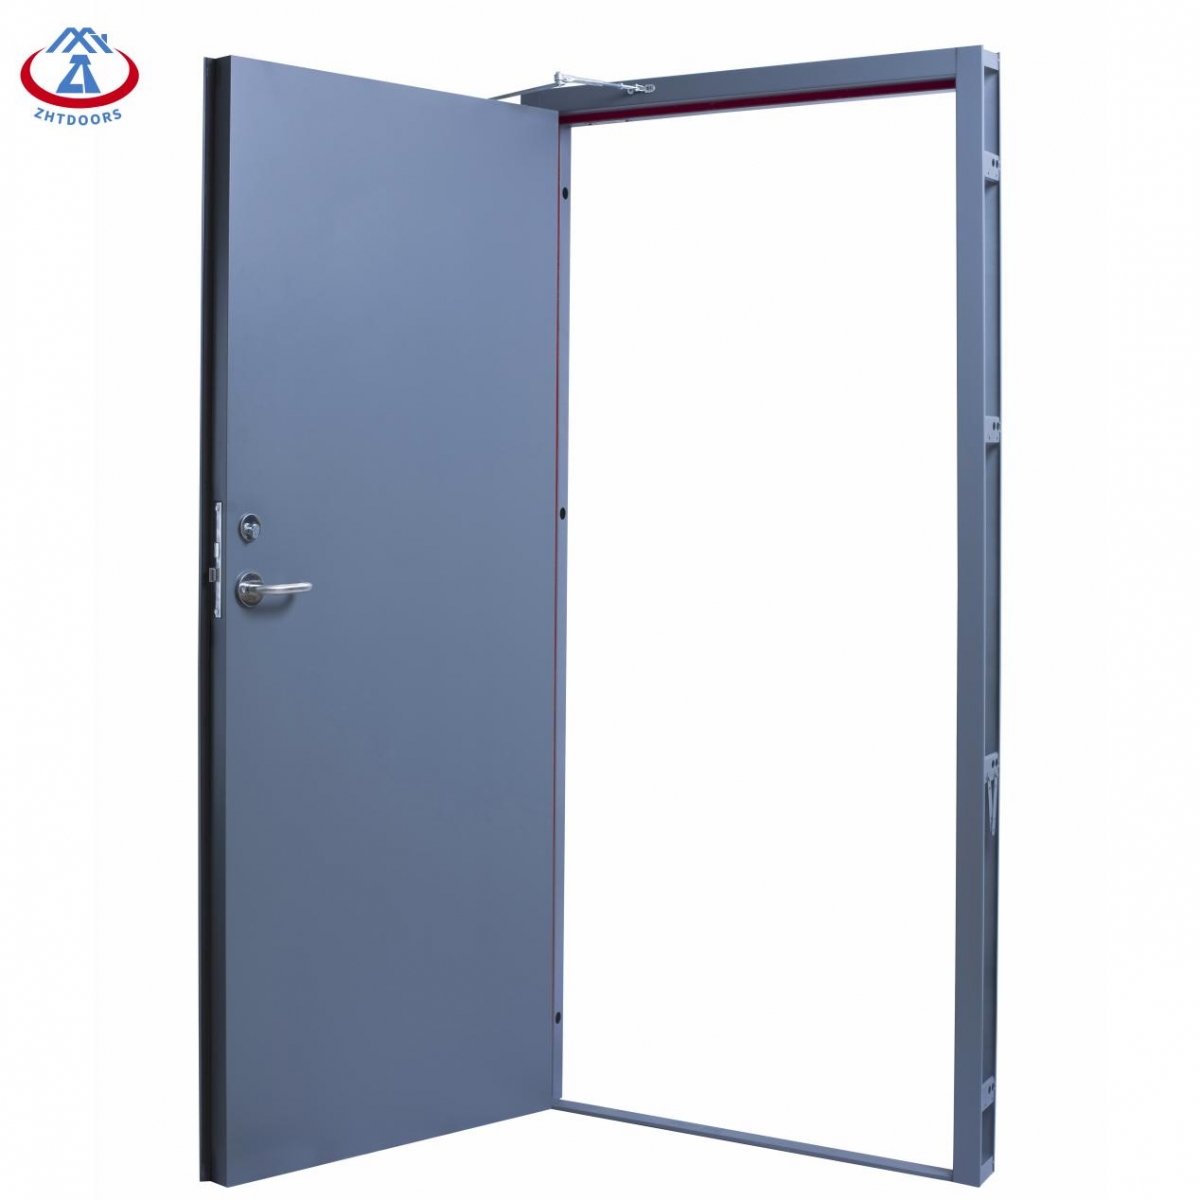 Fire Resistant Sulod sa 120 Minutos Galvanized Fireproof Doors-ZTFIRE Door- Fire Door, Fireproof Door, Fire rated Door, Fire Resistant Door, Steel Door, Metal Door, Exit Door